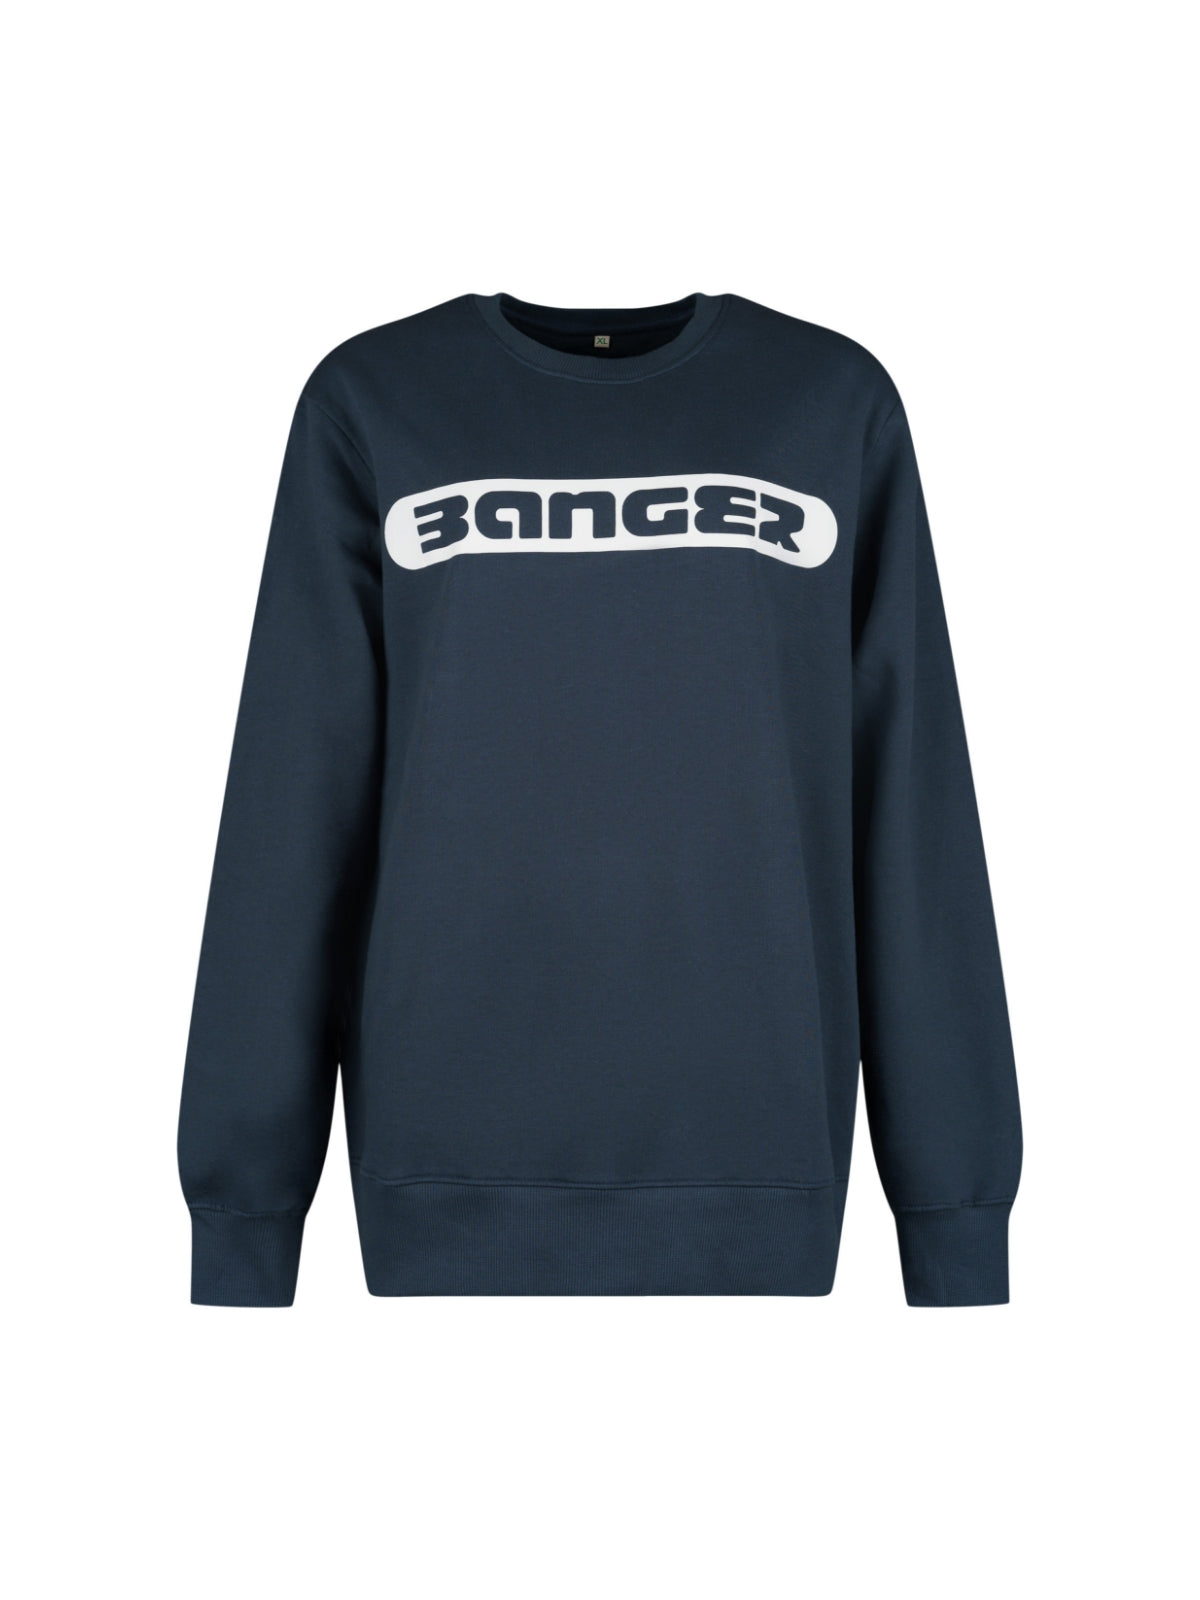 ILON EDITION - Banger College Sweatshirt